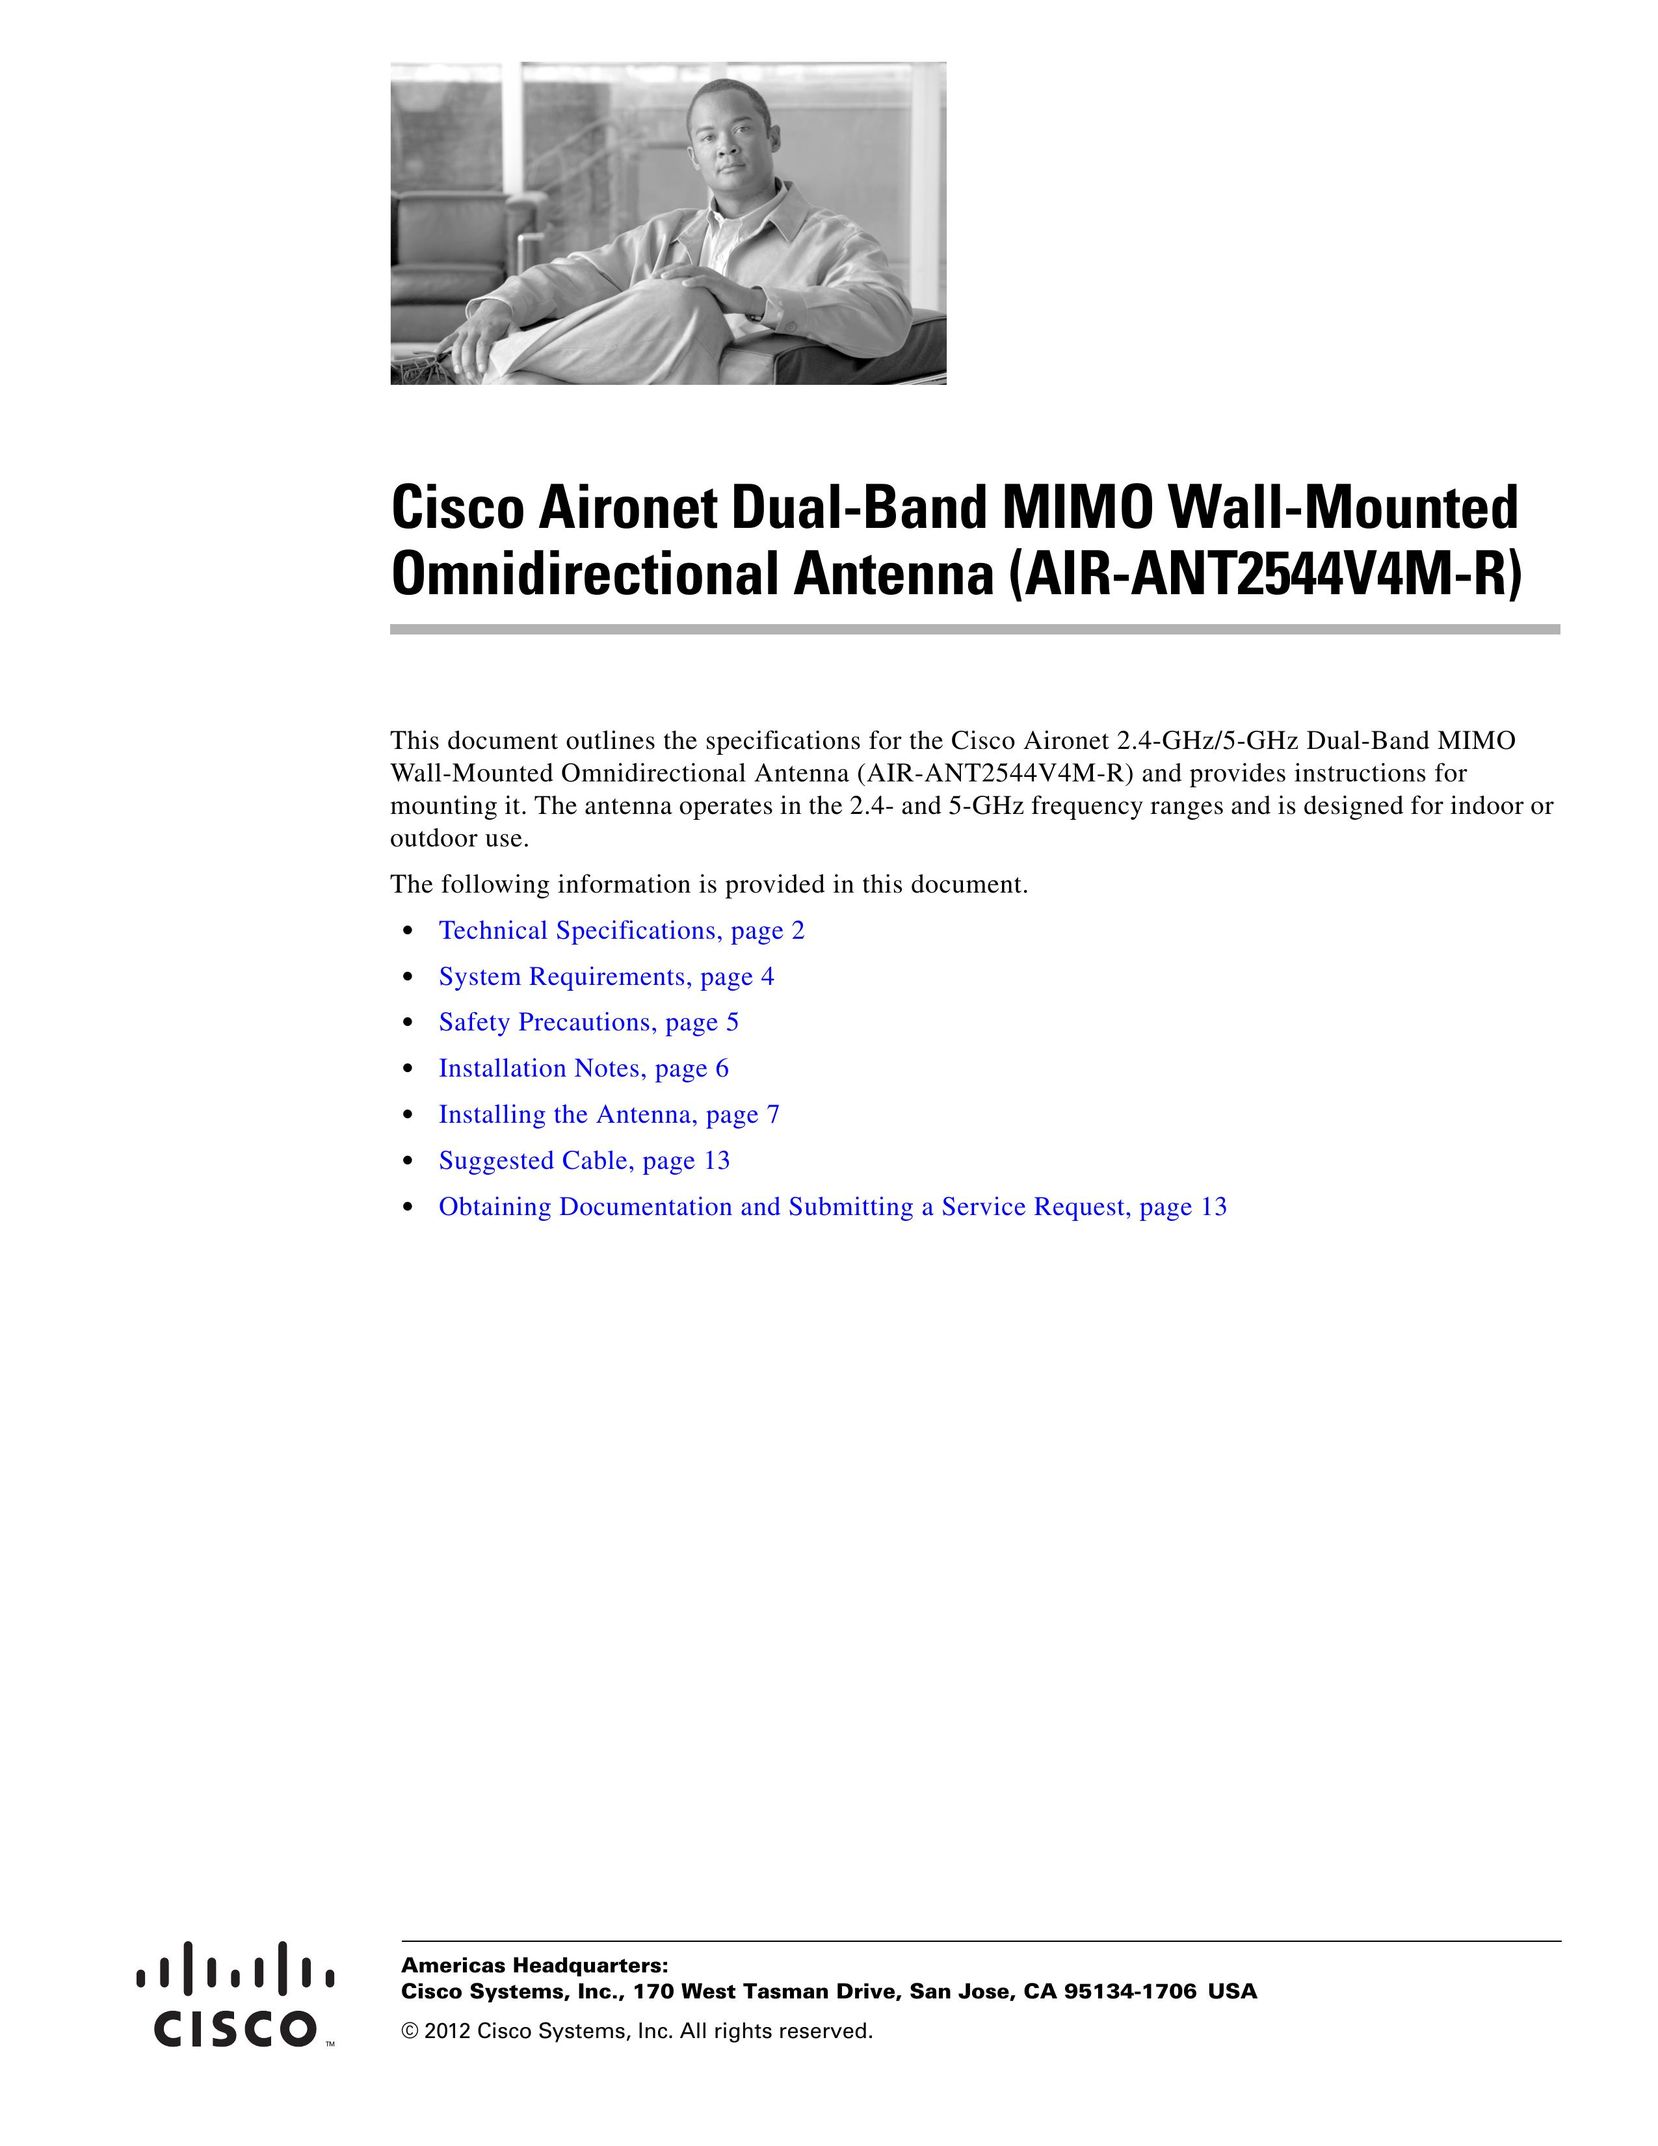 Cisco Systems AIRANT2544V4MR TV Antenna User Manual